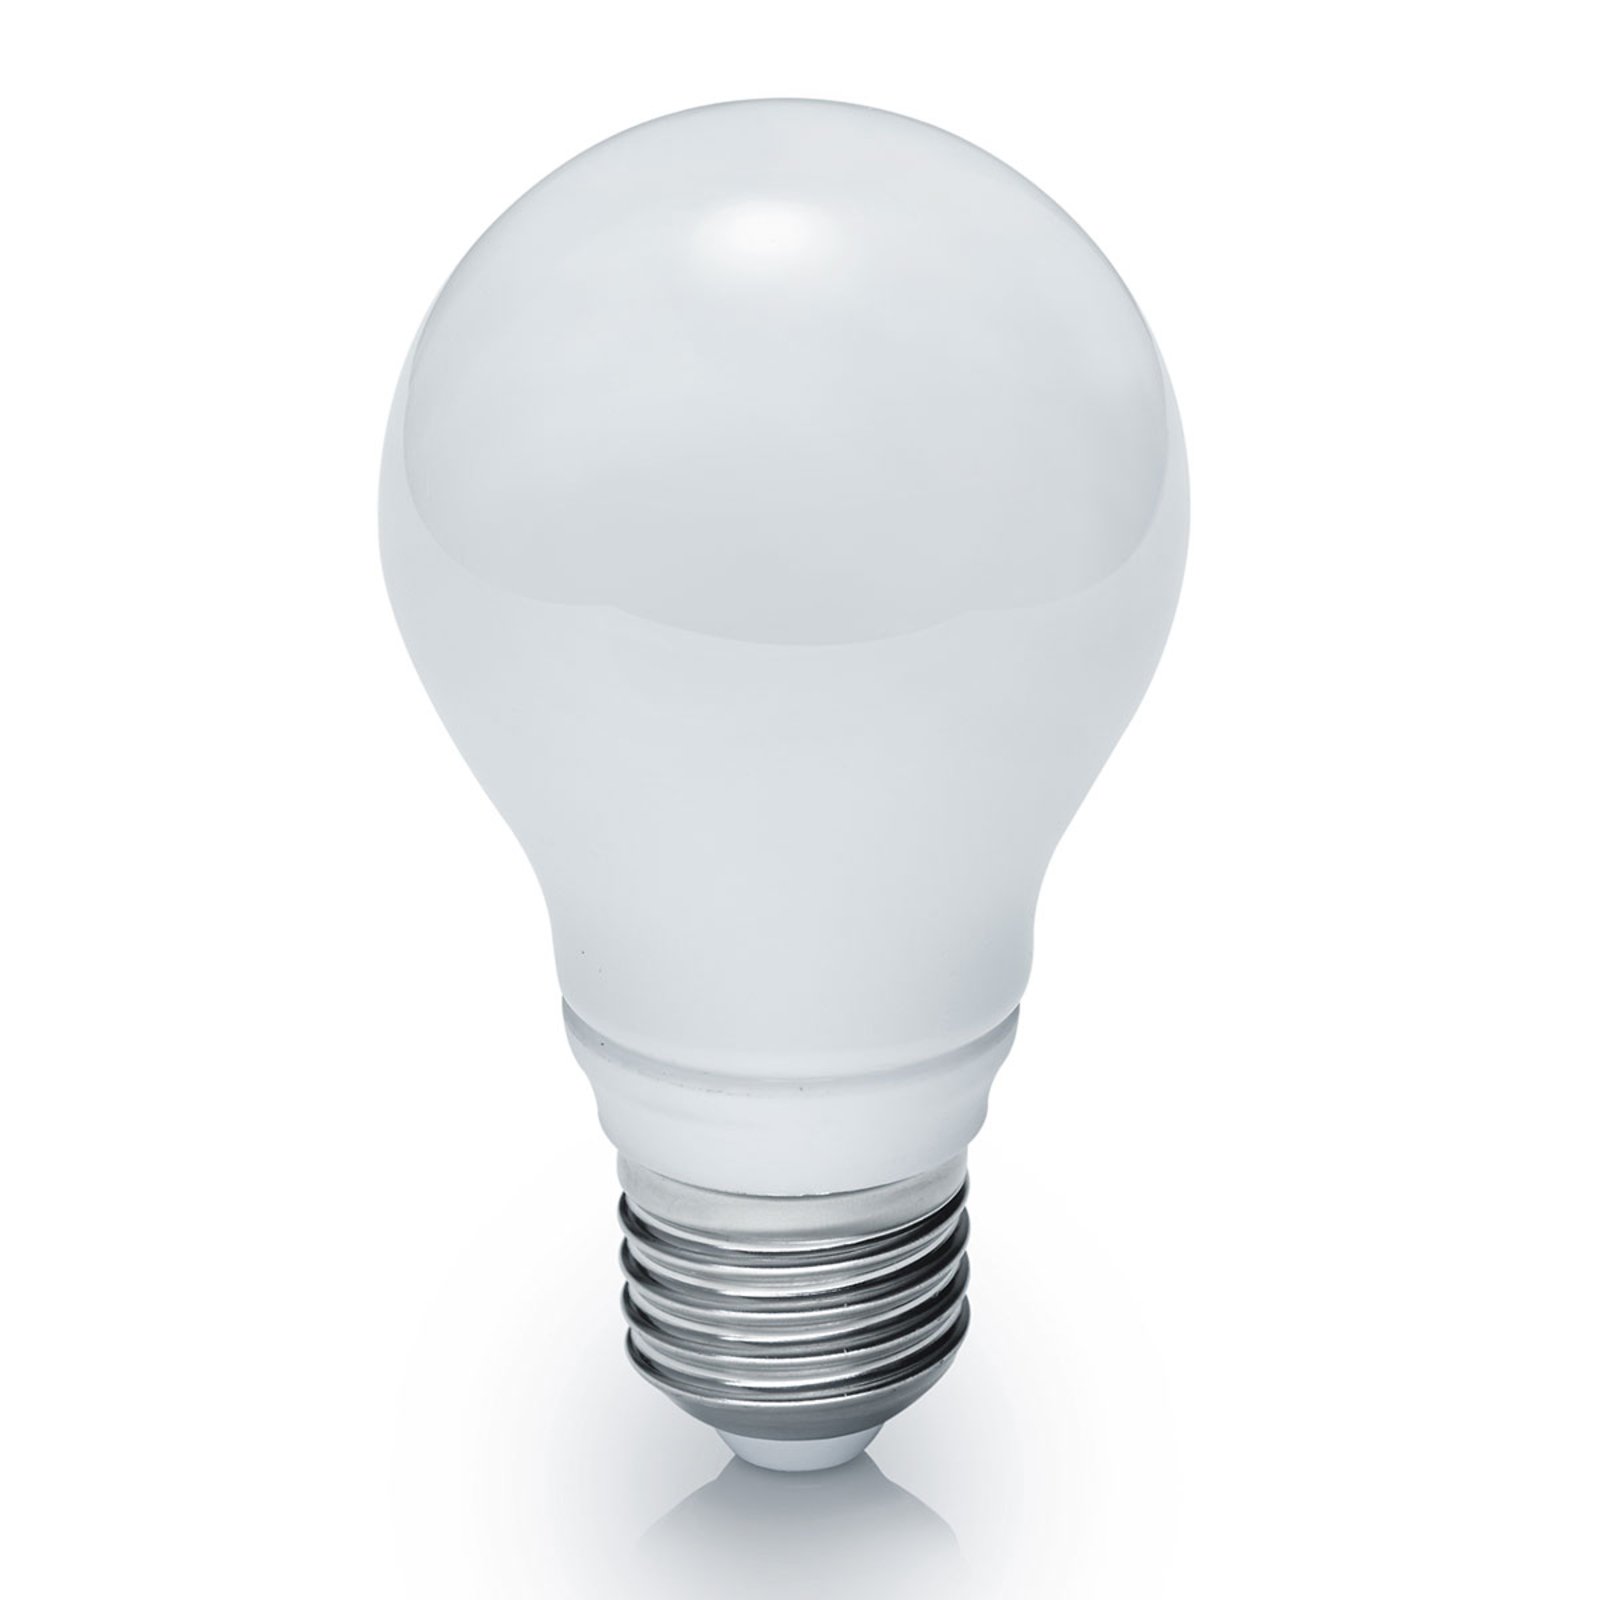 LED lamp 10W dimbaar, lichttemperatuur warmwit | Lampen24.nl